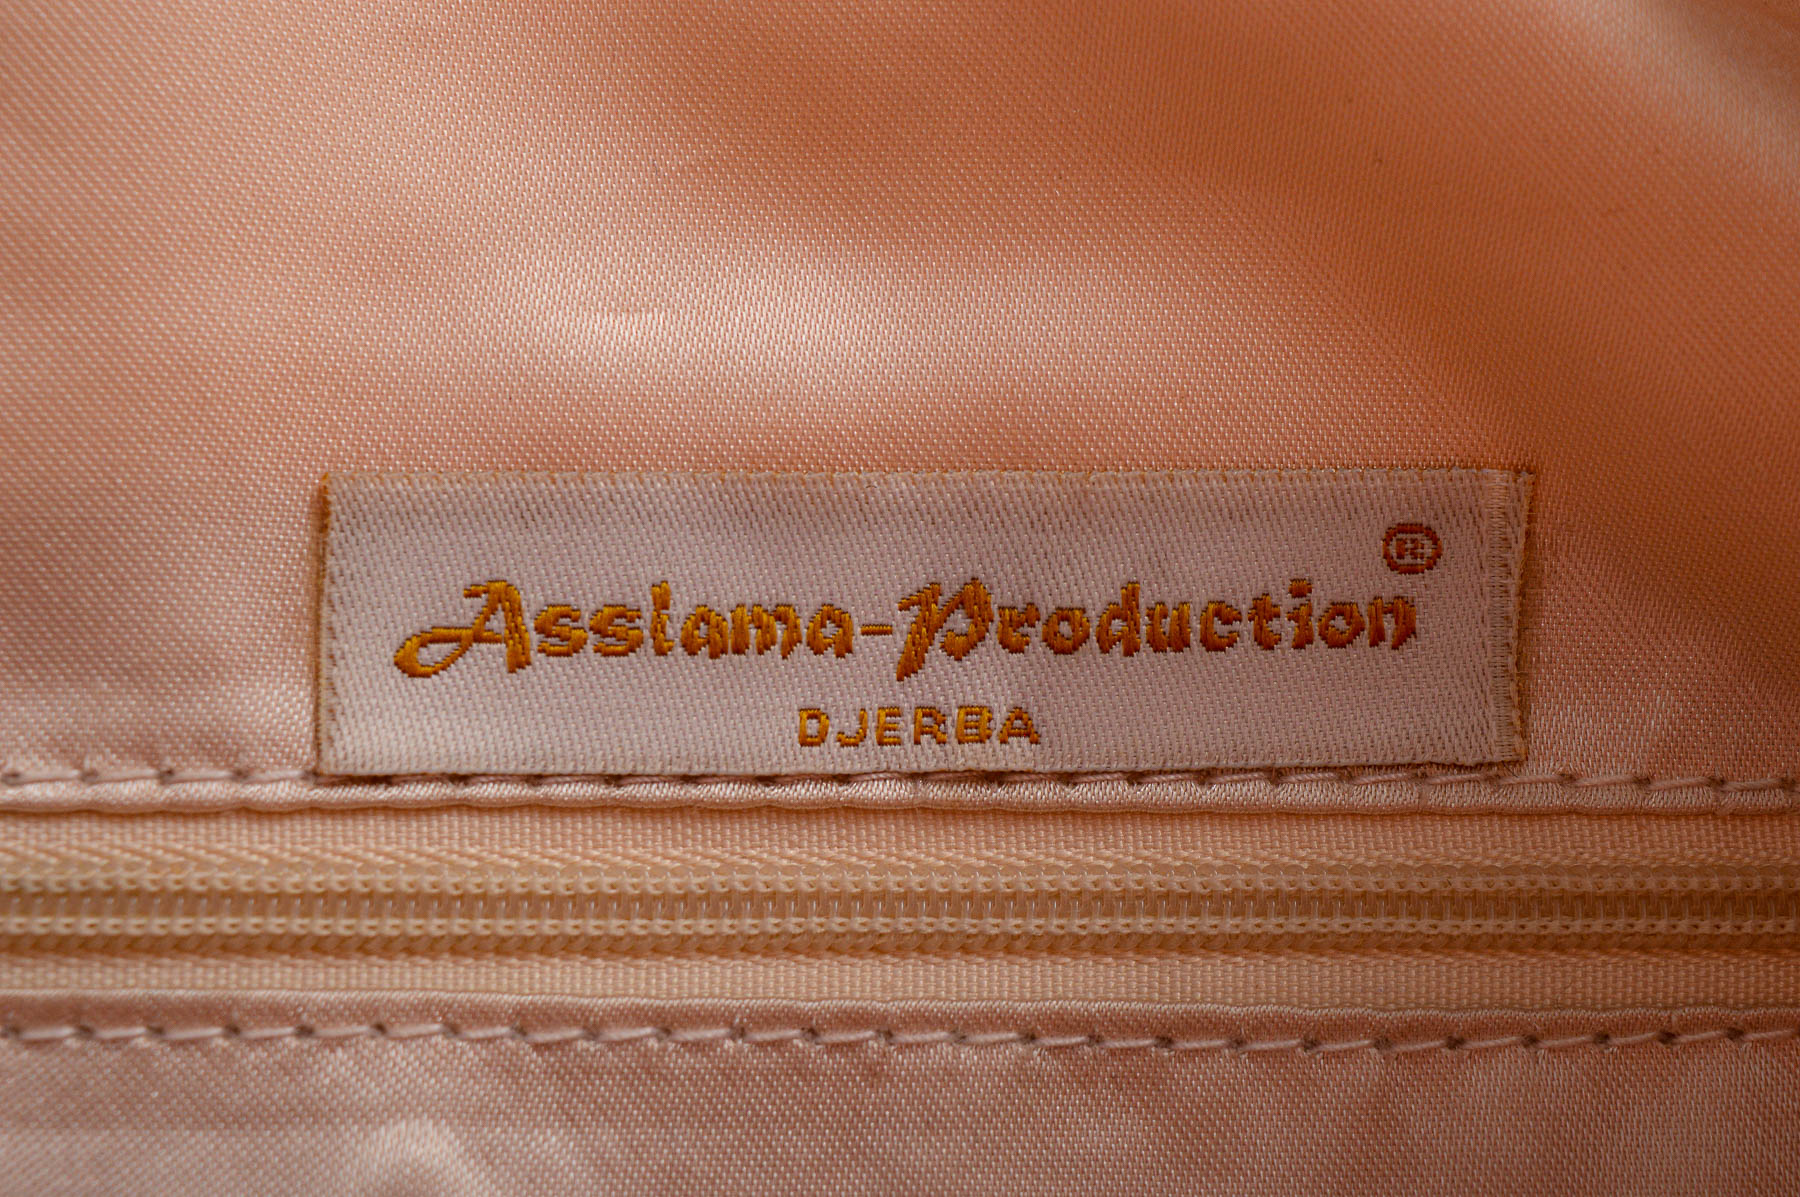 Shopping bag - Assiama - Production - 3